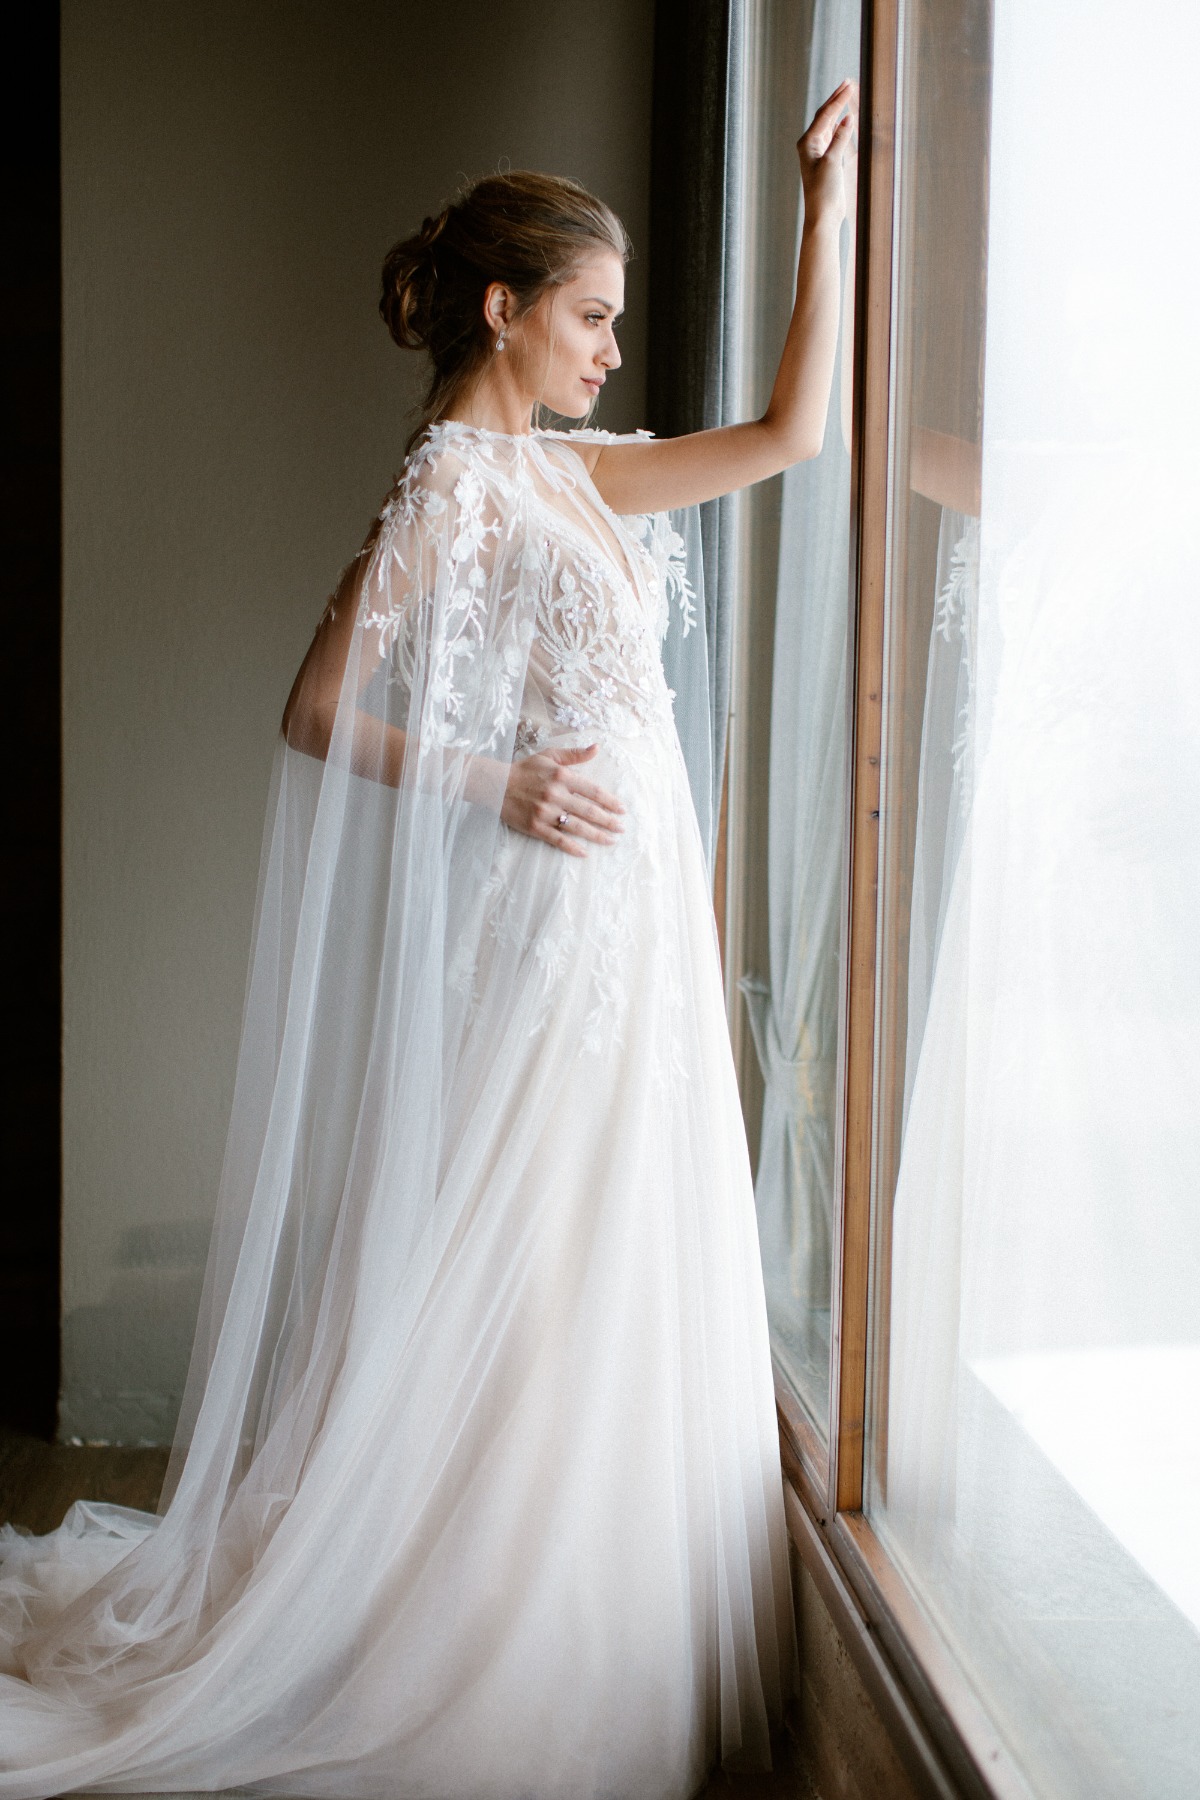 Vera Paul wedding gown